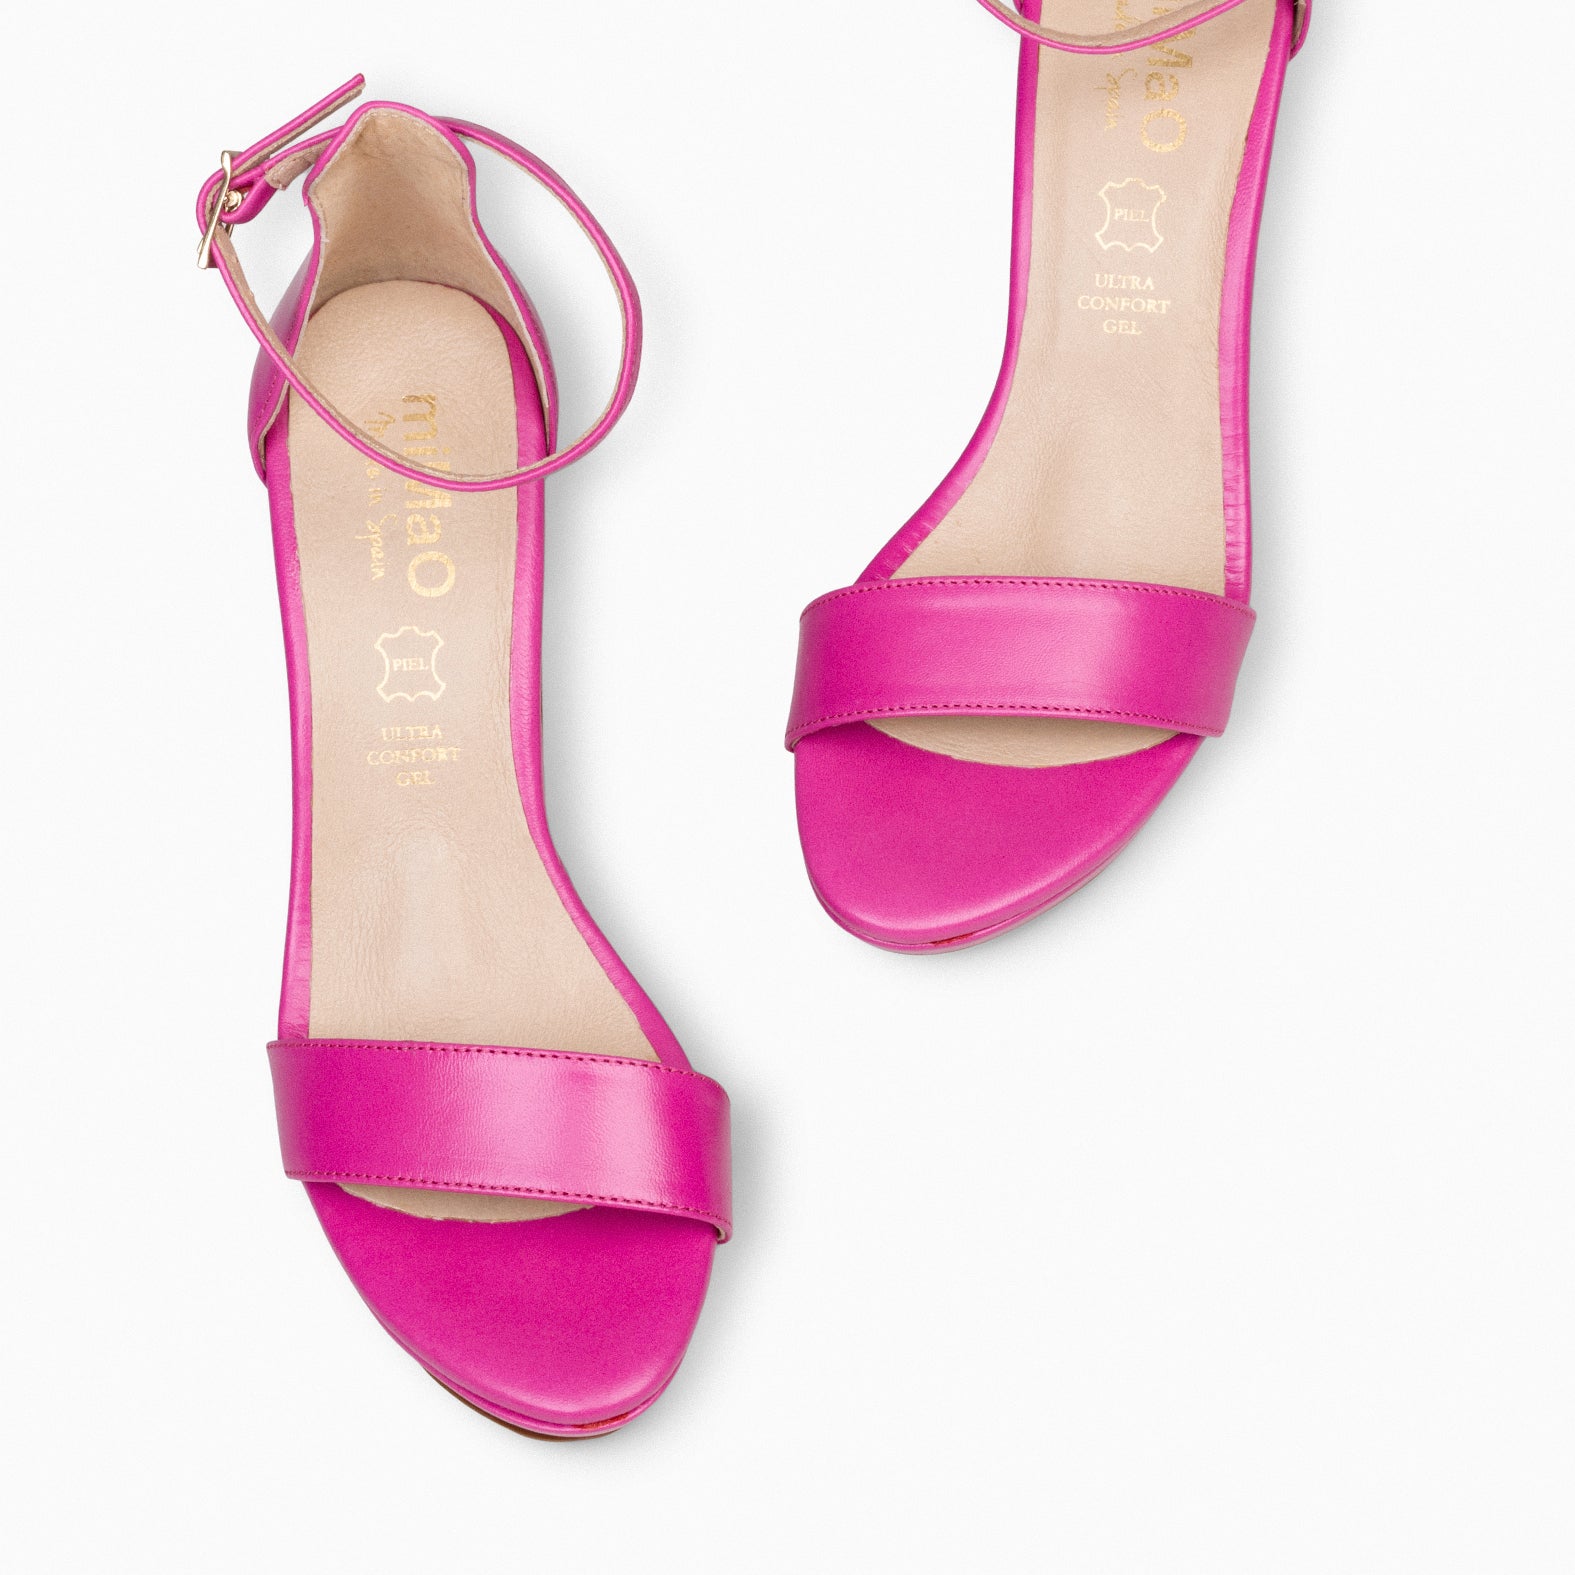 PARTY – PINK high-heeled platform sandals